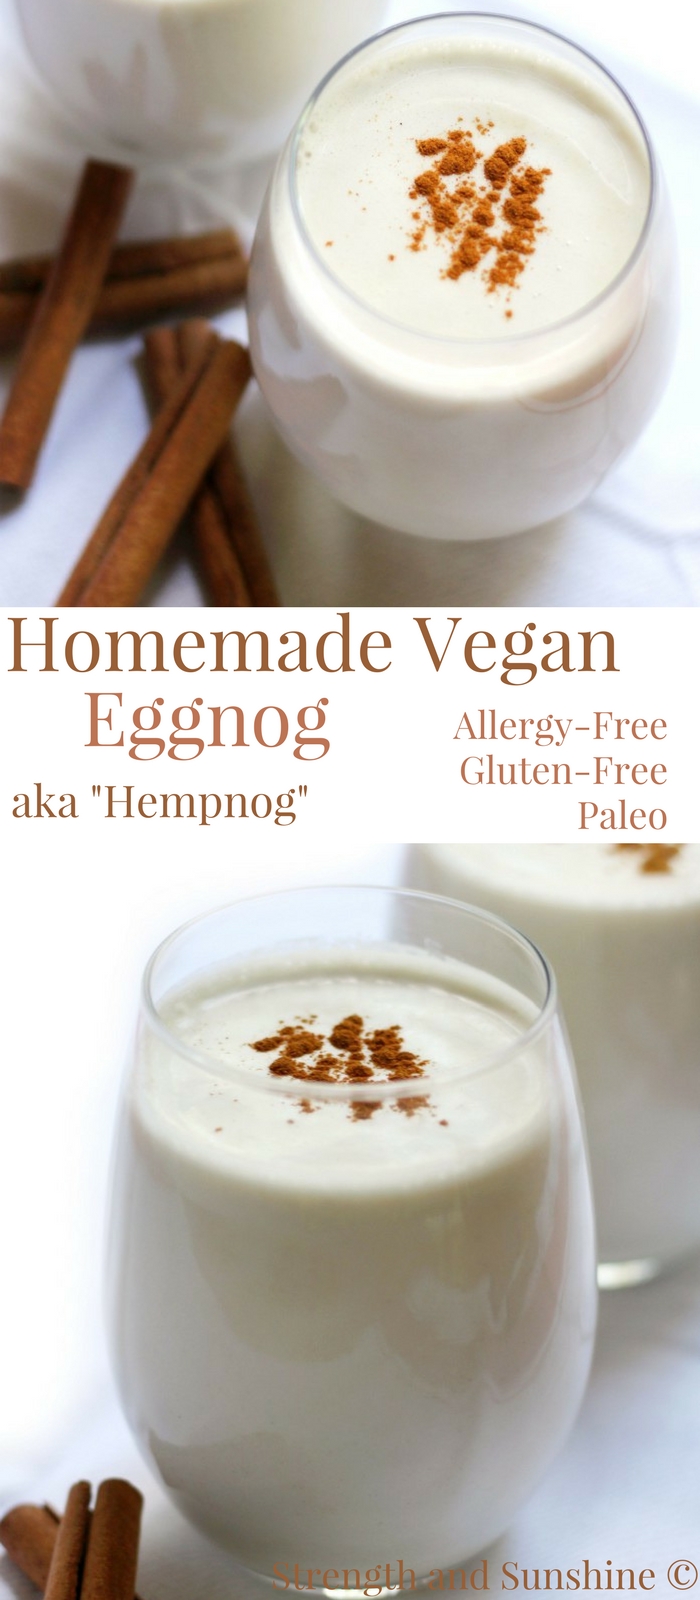 Homemade Vegan Eggnog "Hempnog" (Gluten-Free, Allergy-Free, Paleo) | Strength and Sunshine @RebeccaGF666 A classic holiday beverage made vegan, gluten-free, paleo, top-8 allergy-free, and sugar-free! This Homemade Vegan Eggnog, aka "Hempnog", will be a standout drink recipe to include this season! Even the non-eggnog drinkers will fall in love! #eggnog #vegan #glutenfree #sugarfree #holidays #christmas #paleo #TheNutraMilk #Pmedia #ad